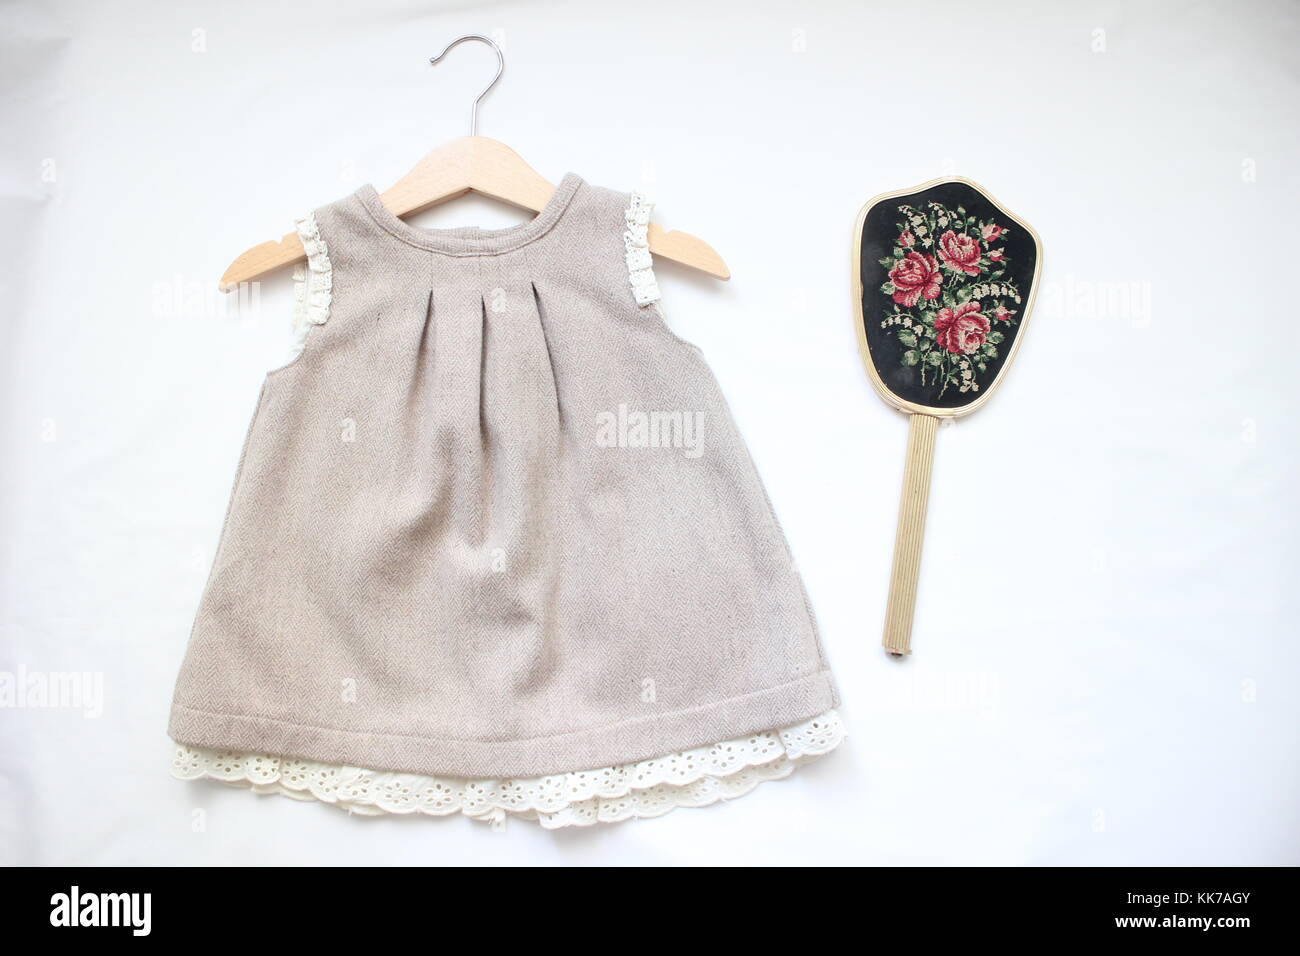 Vintage Baby Kleidung Stockfotografie - Alamy